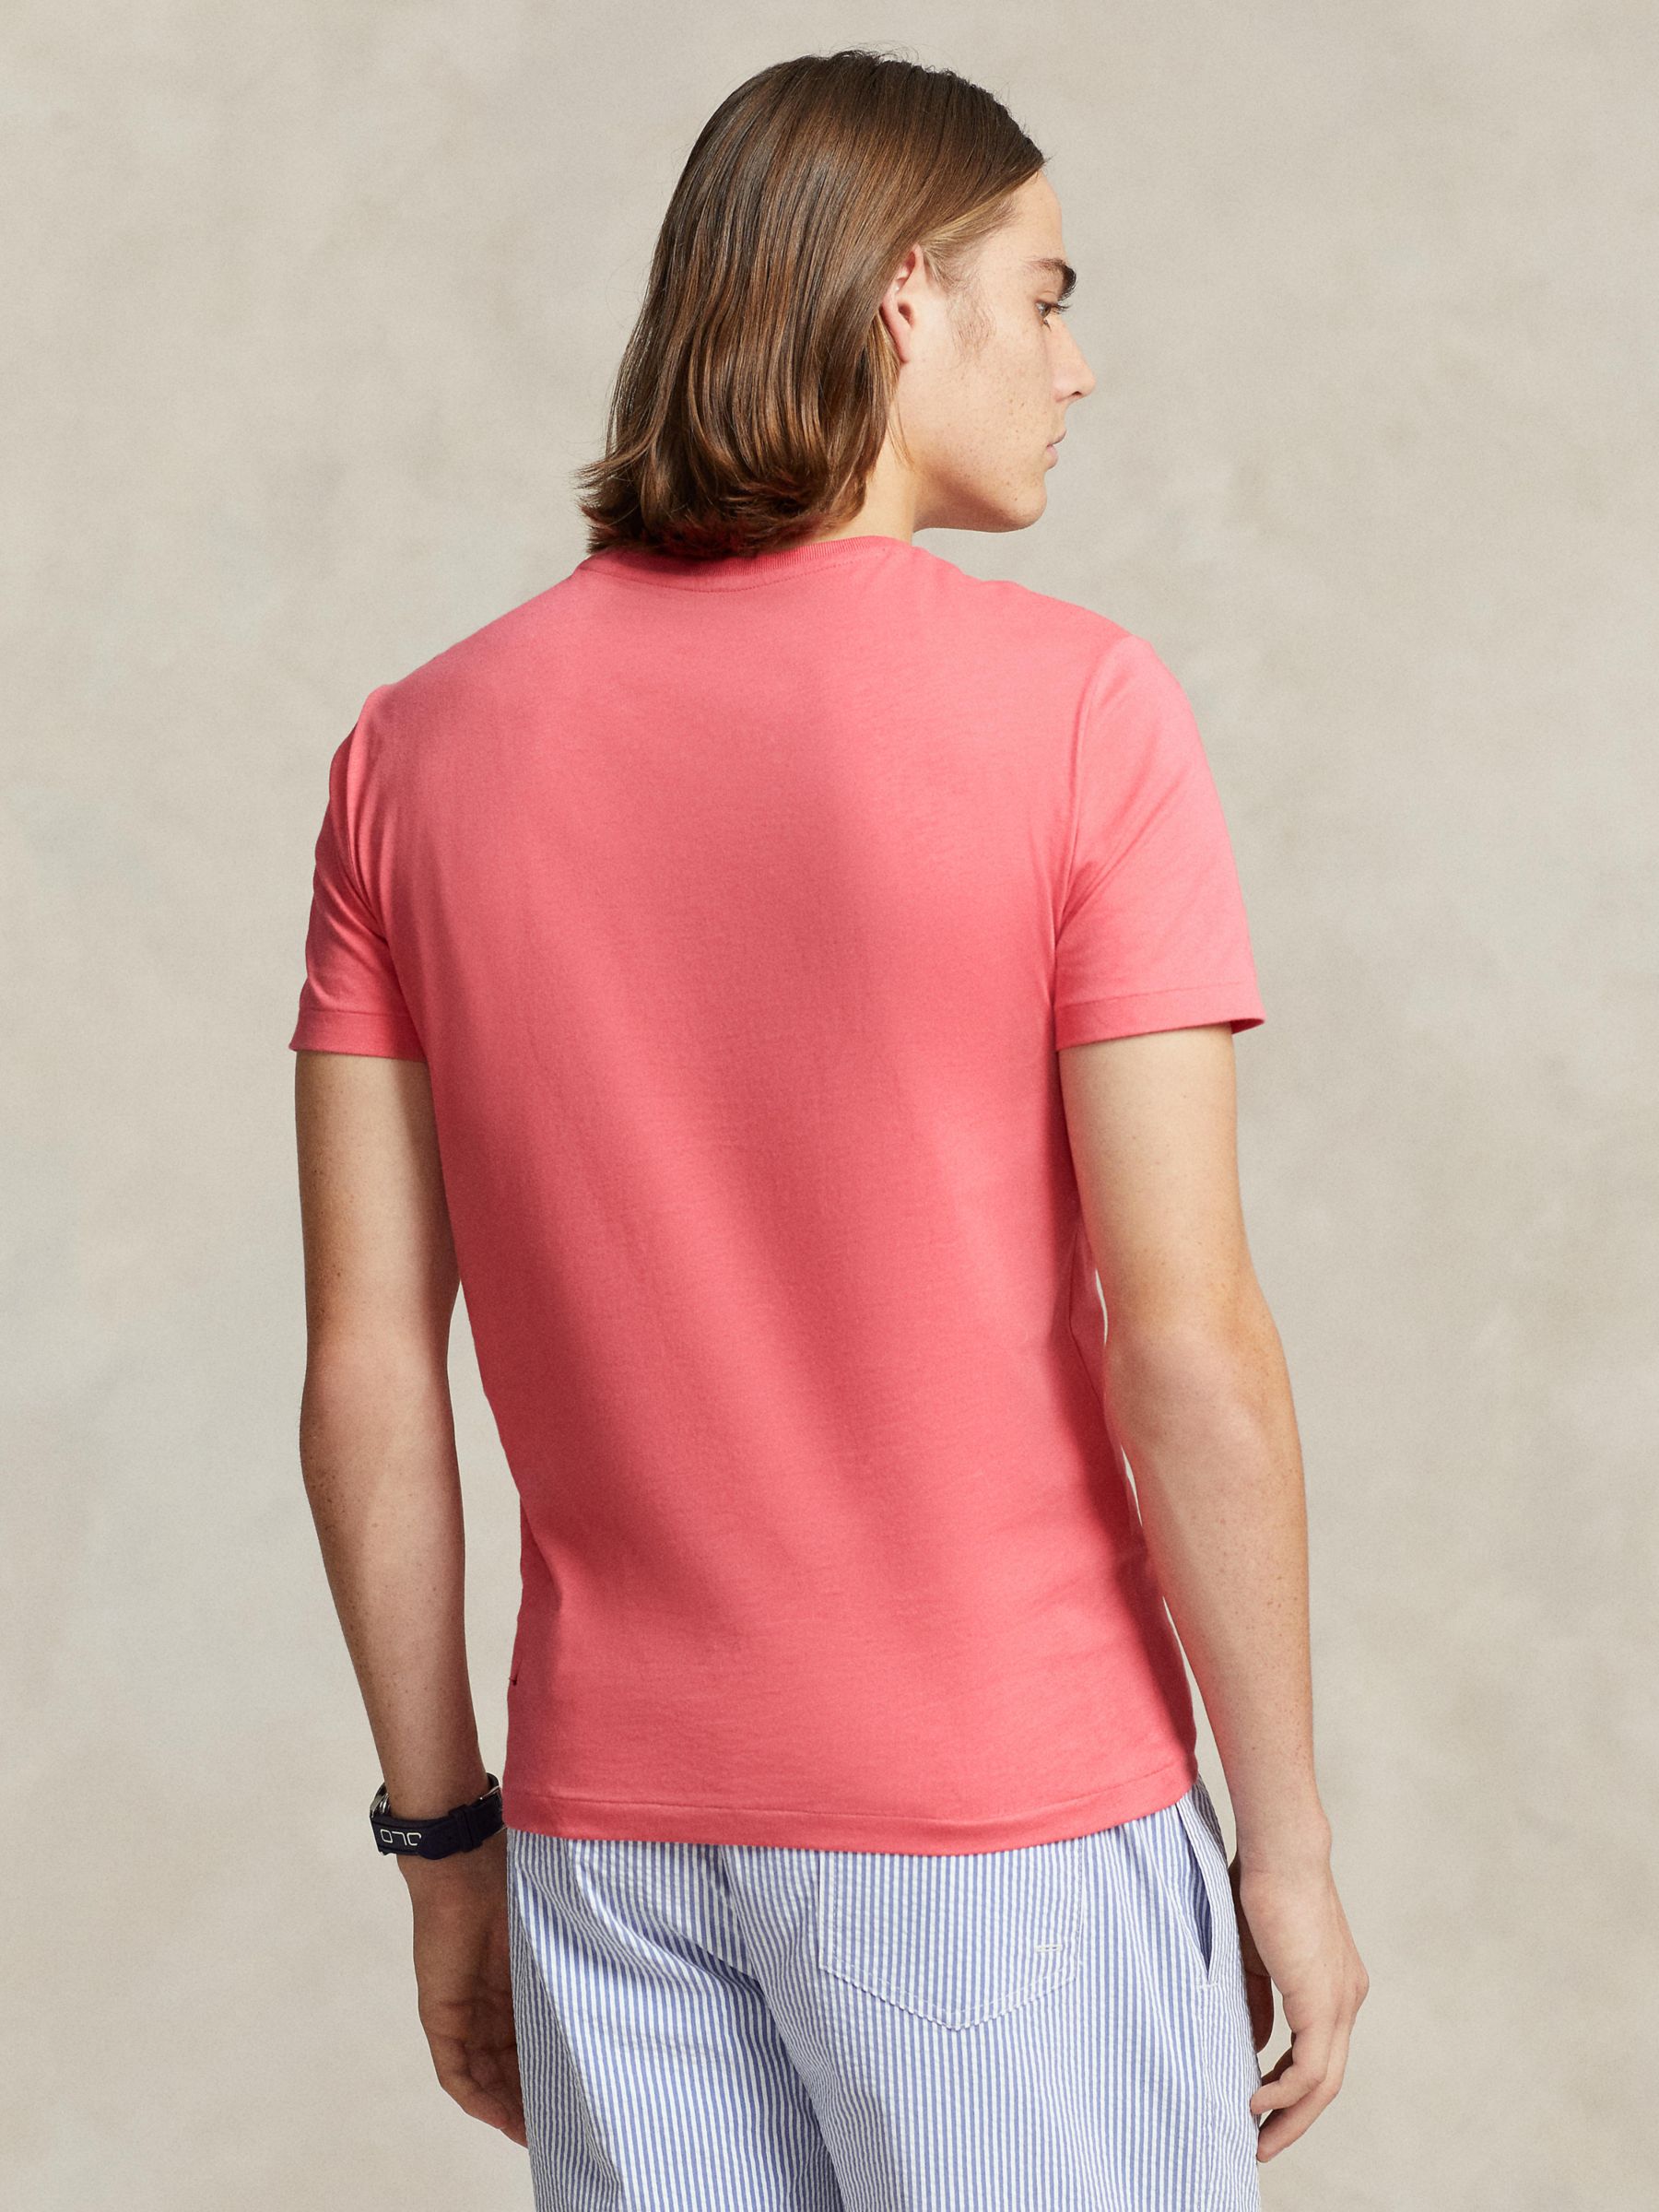 Ralph Lauren Slim Fit Jersey Crew Neck T-Shirt, Pale Red/C7194, L